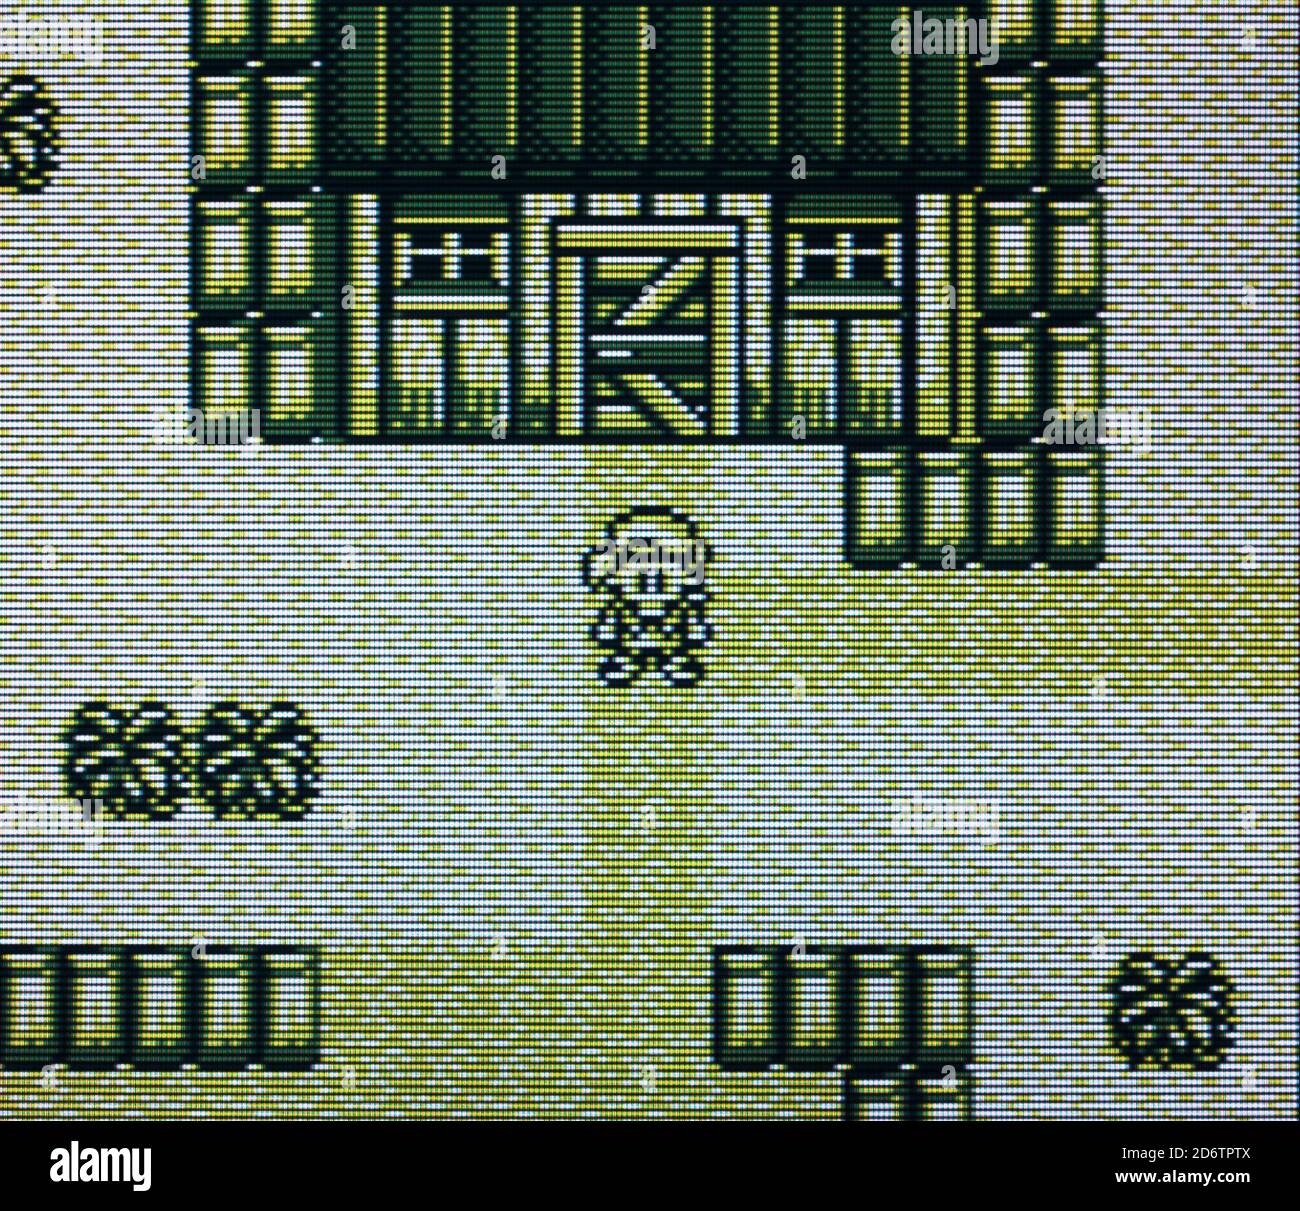 Harvest Moon GB - Nintendo Gameboy Videogame - usage éditorial uniquement Banque D'Images